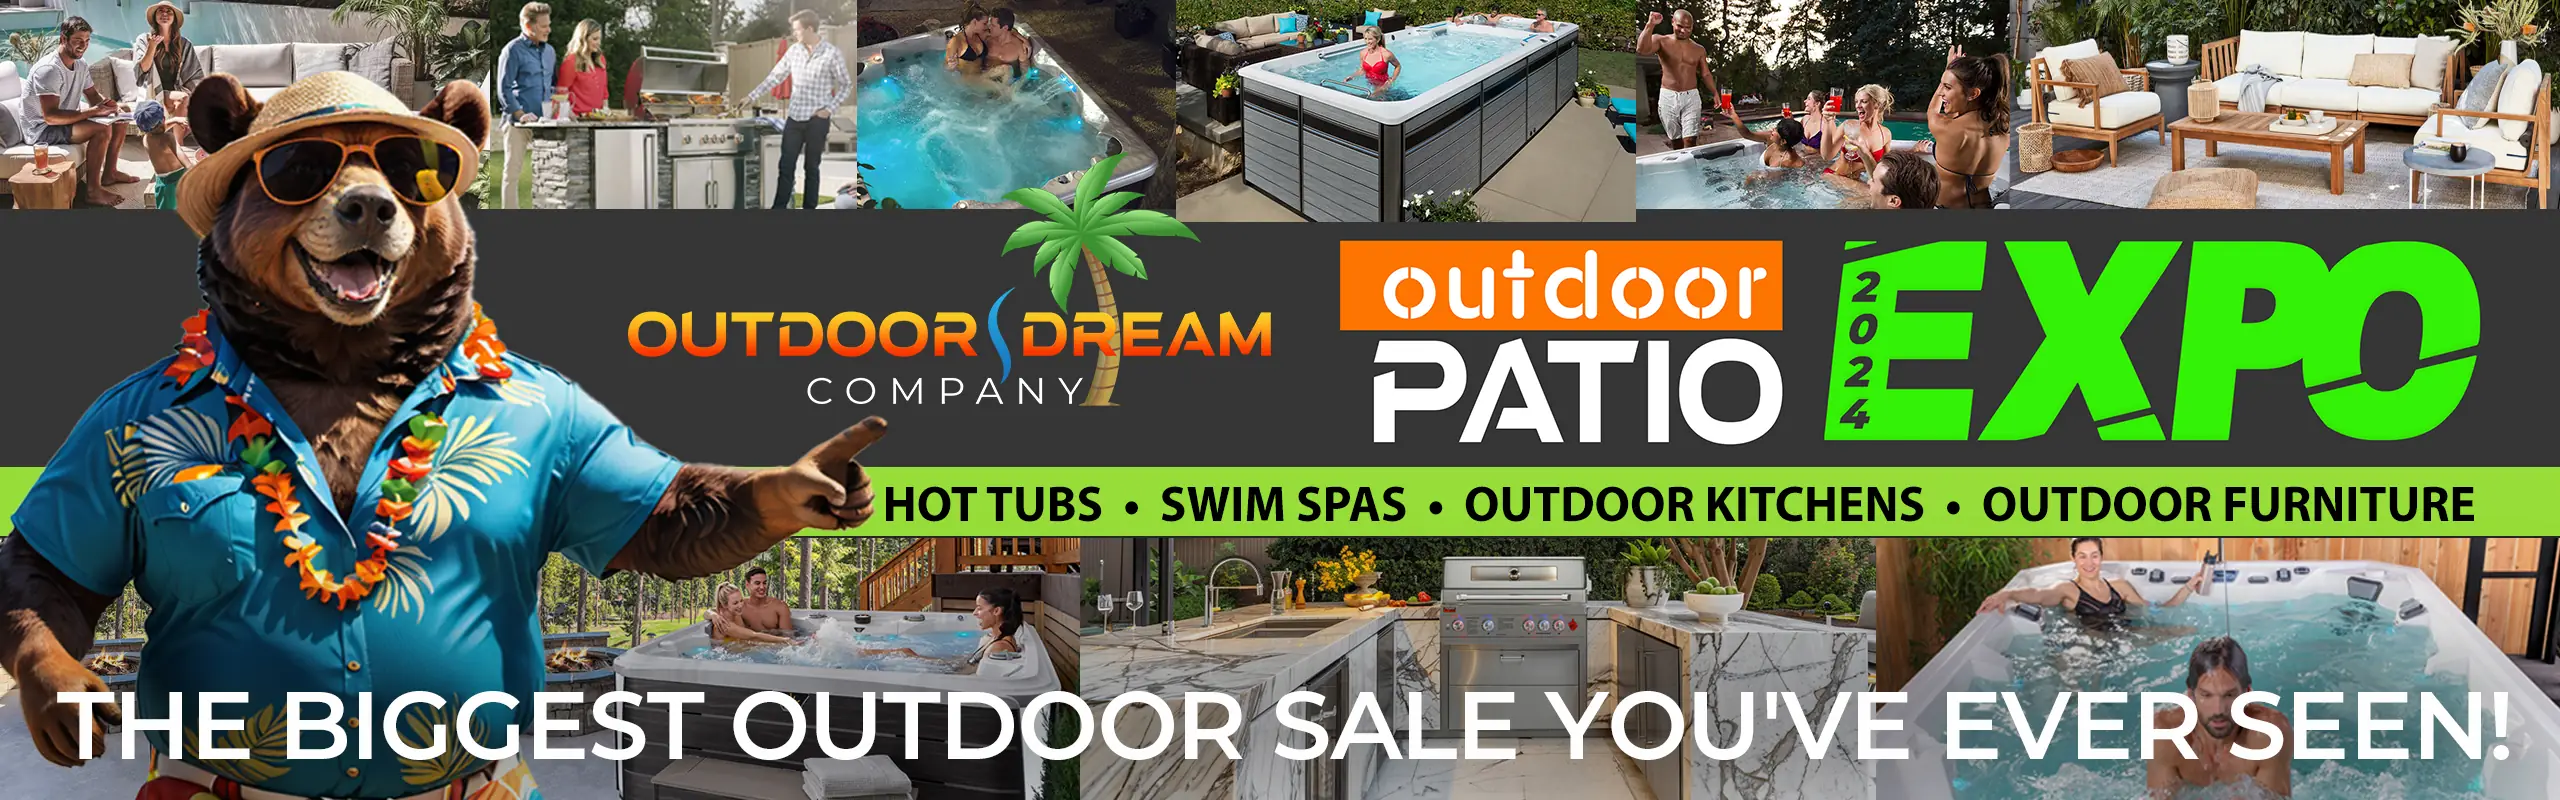 Premier Backyard Grill Island Bar Outdoor Dreams Kitchen Oasis Hot Tub Swim Spa Luxury Living Jacksonville Florida USA